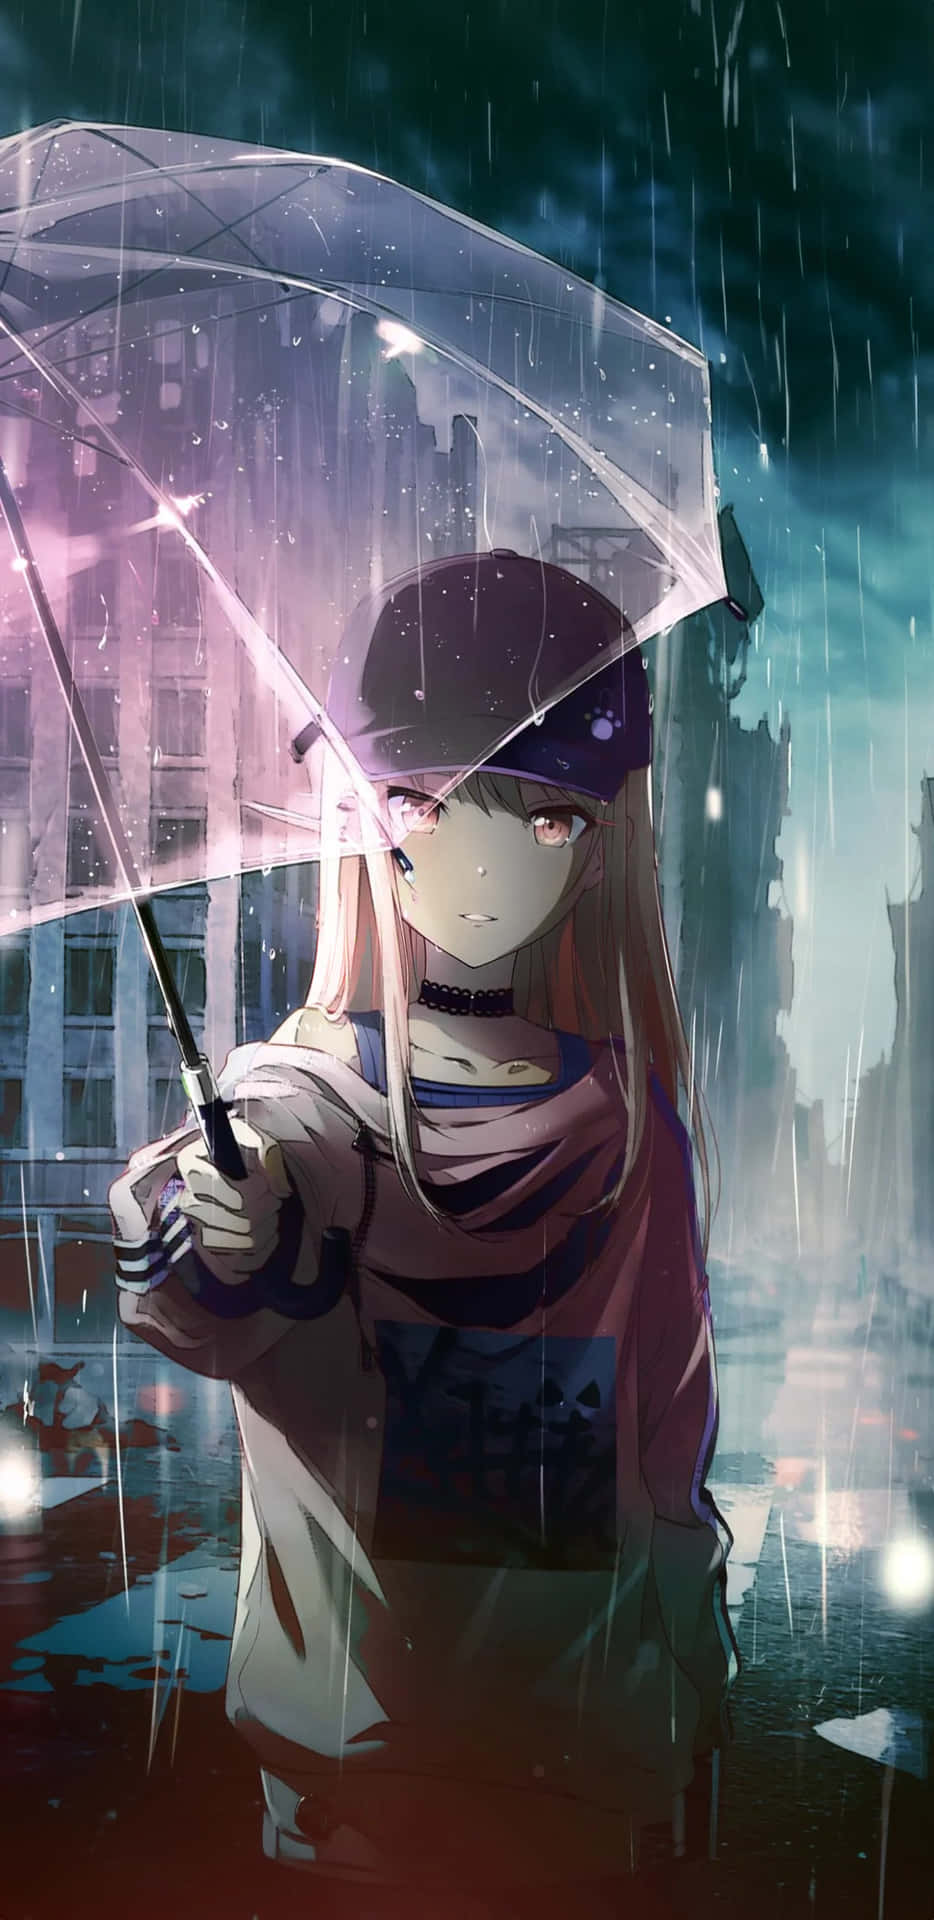 Rainy Cityscape Anime Girl Umbrella.jpg Wallpaper